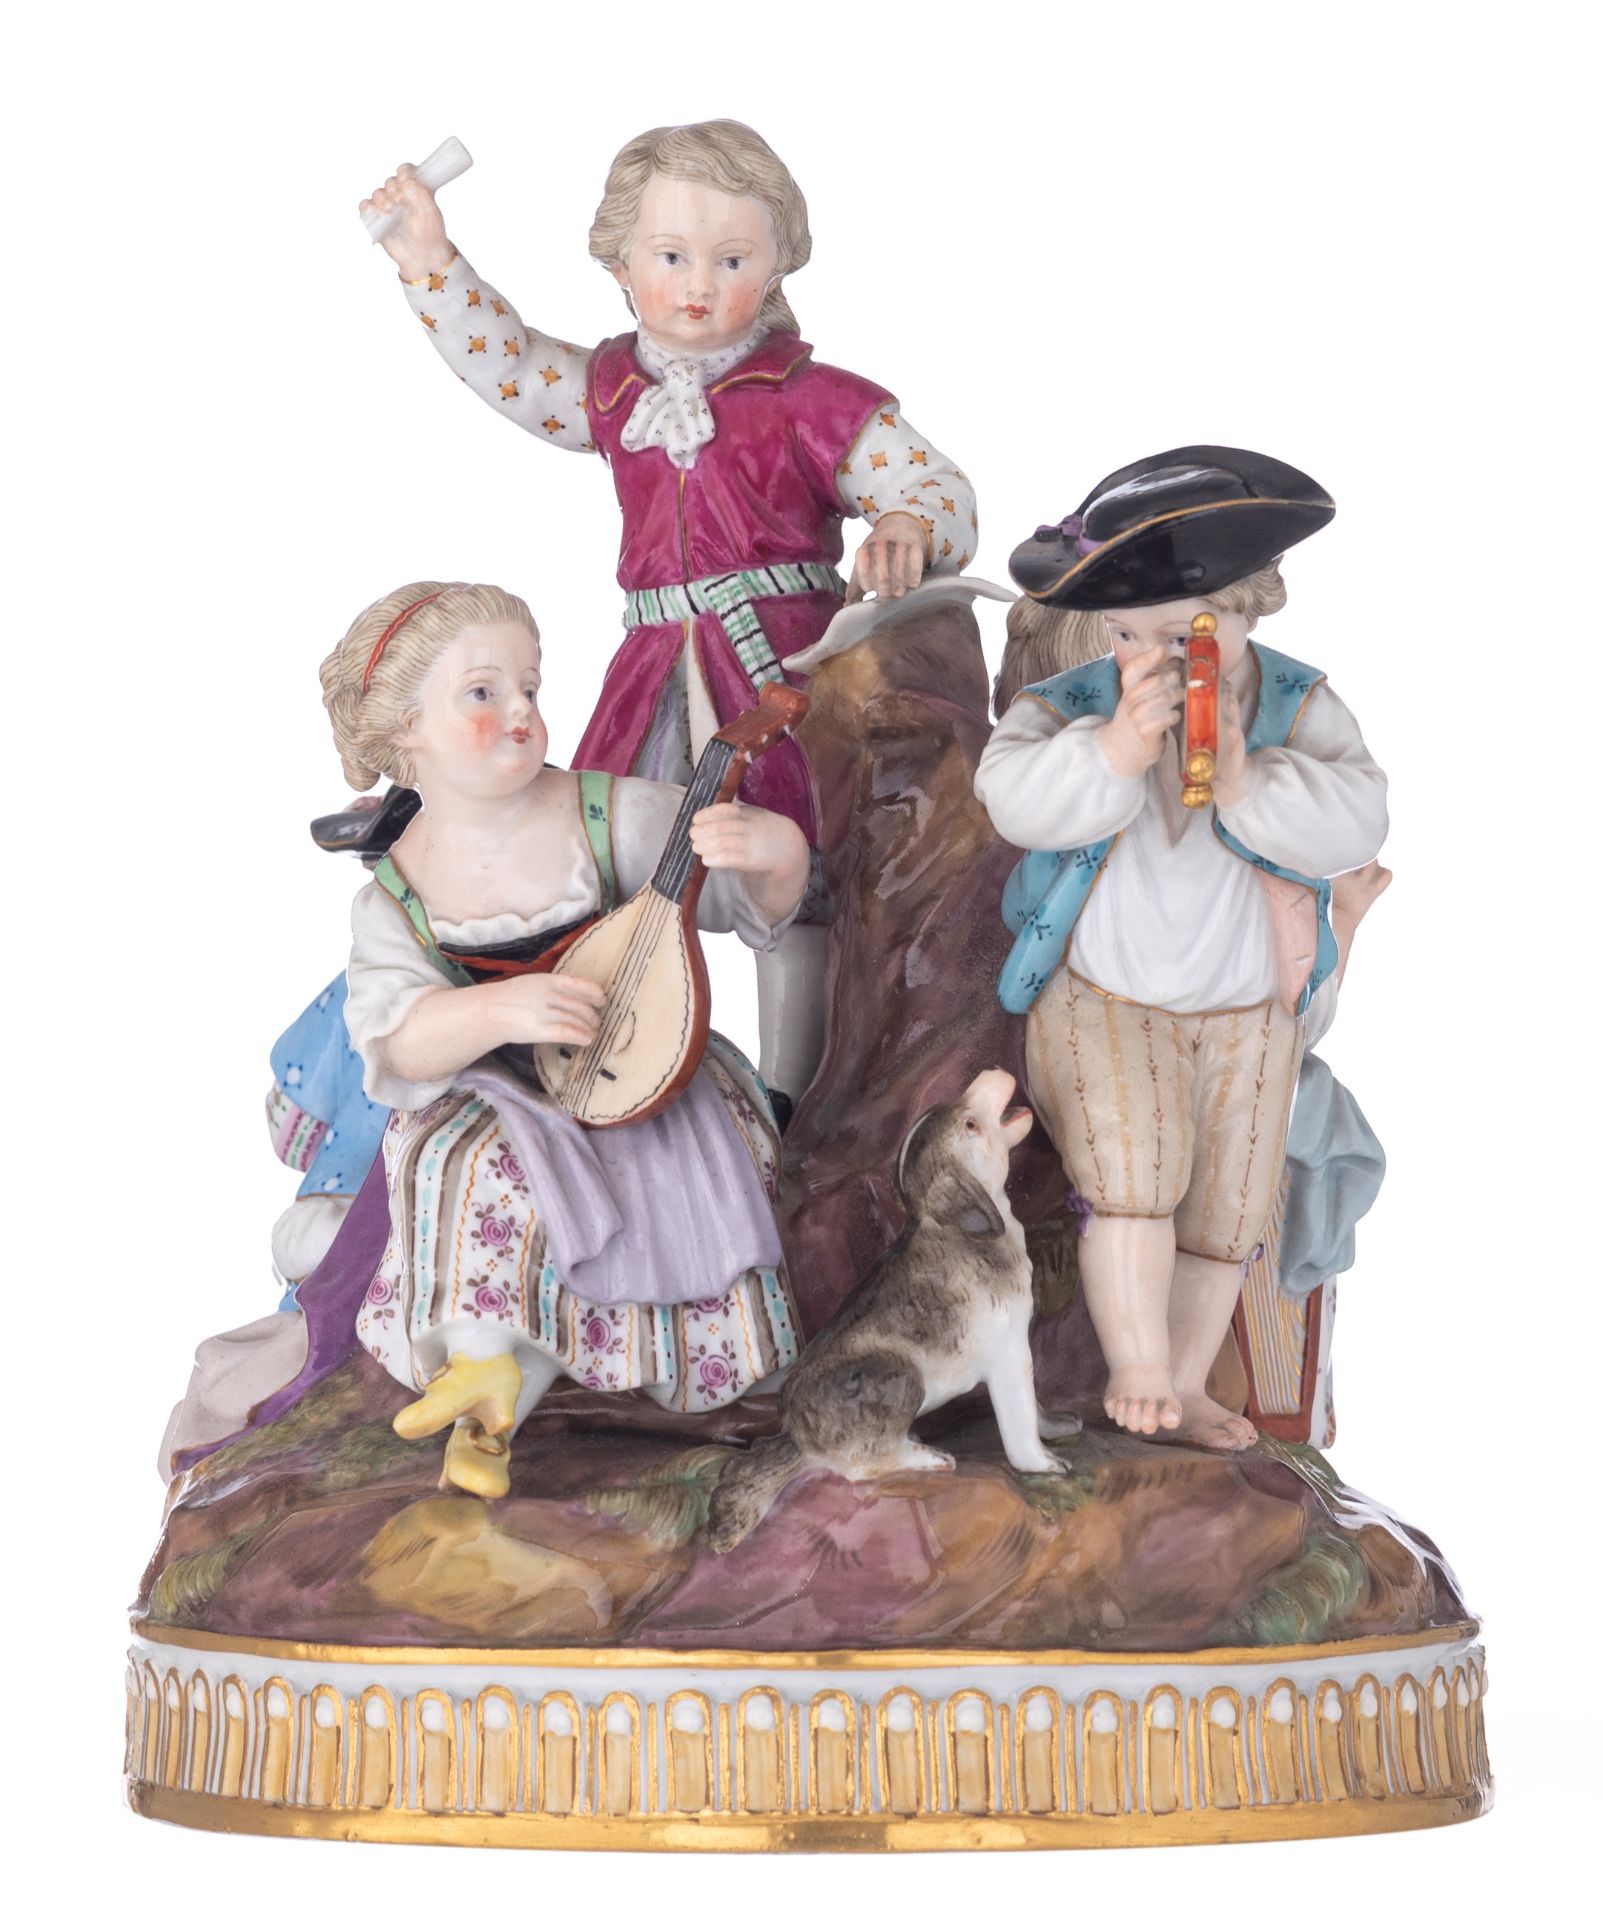 A Meissen porcelain group depicting music-making children, 19thC, H 17 - W 14 cm